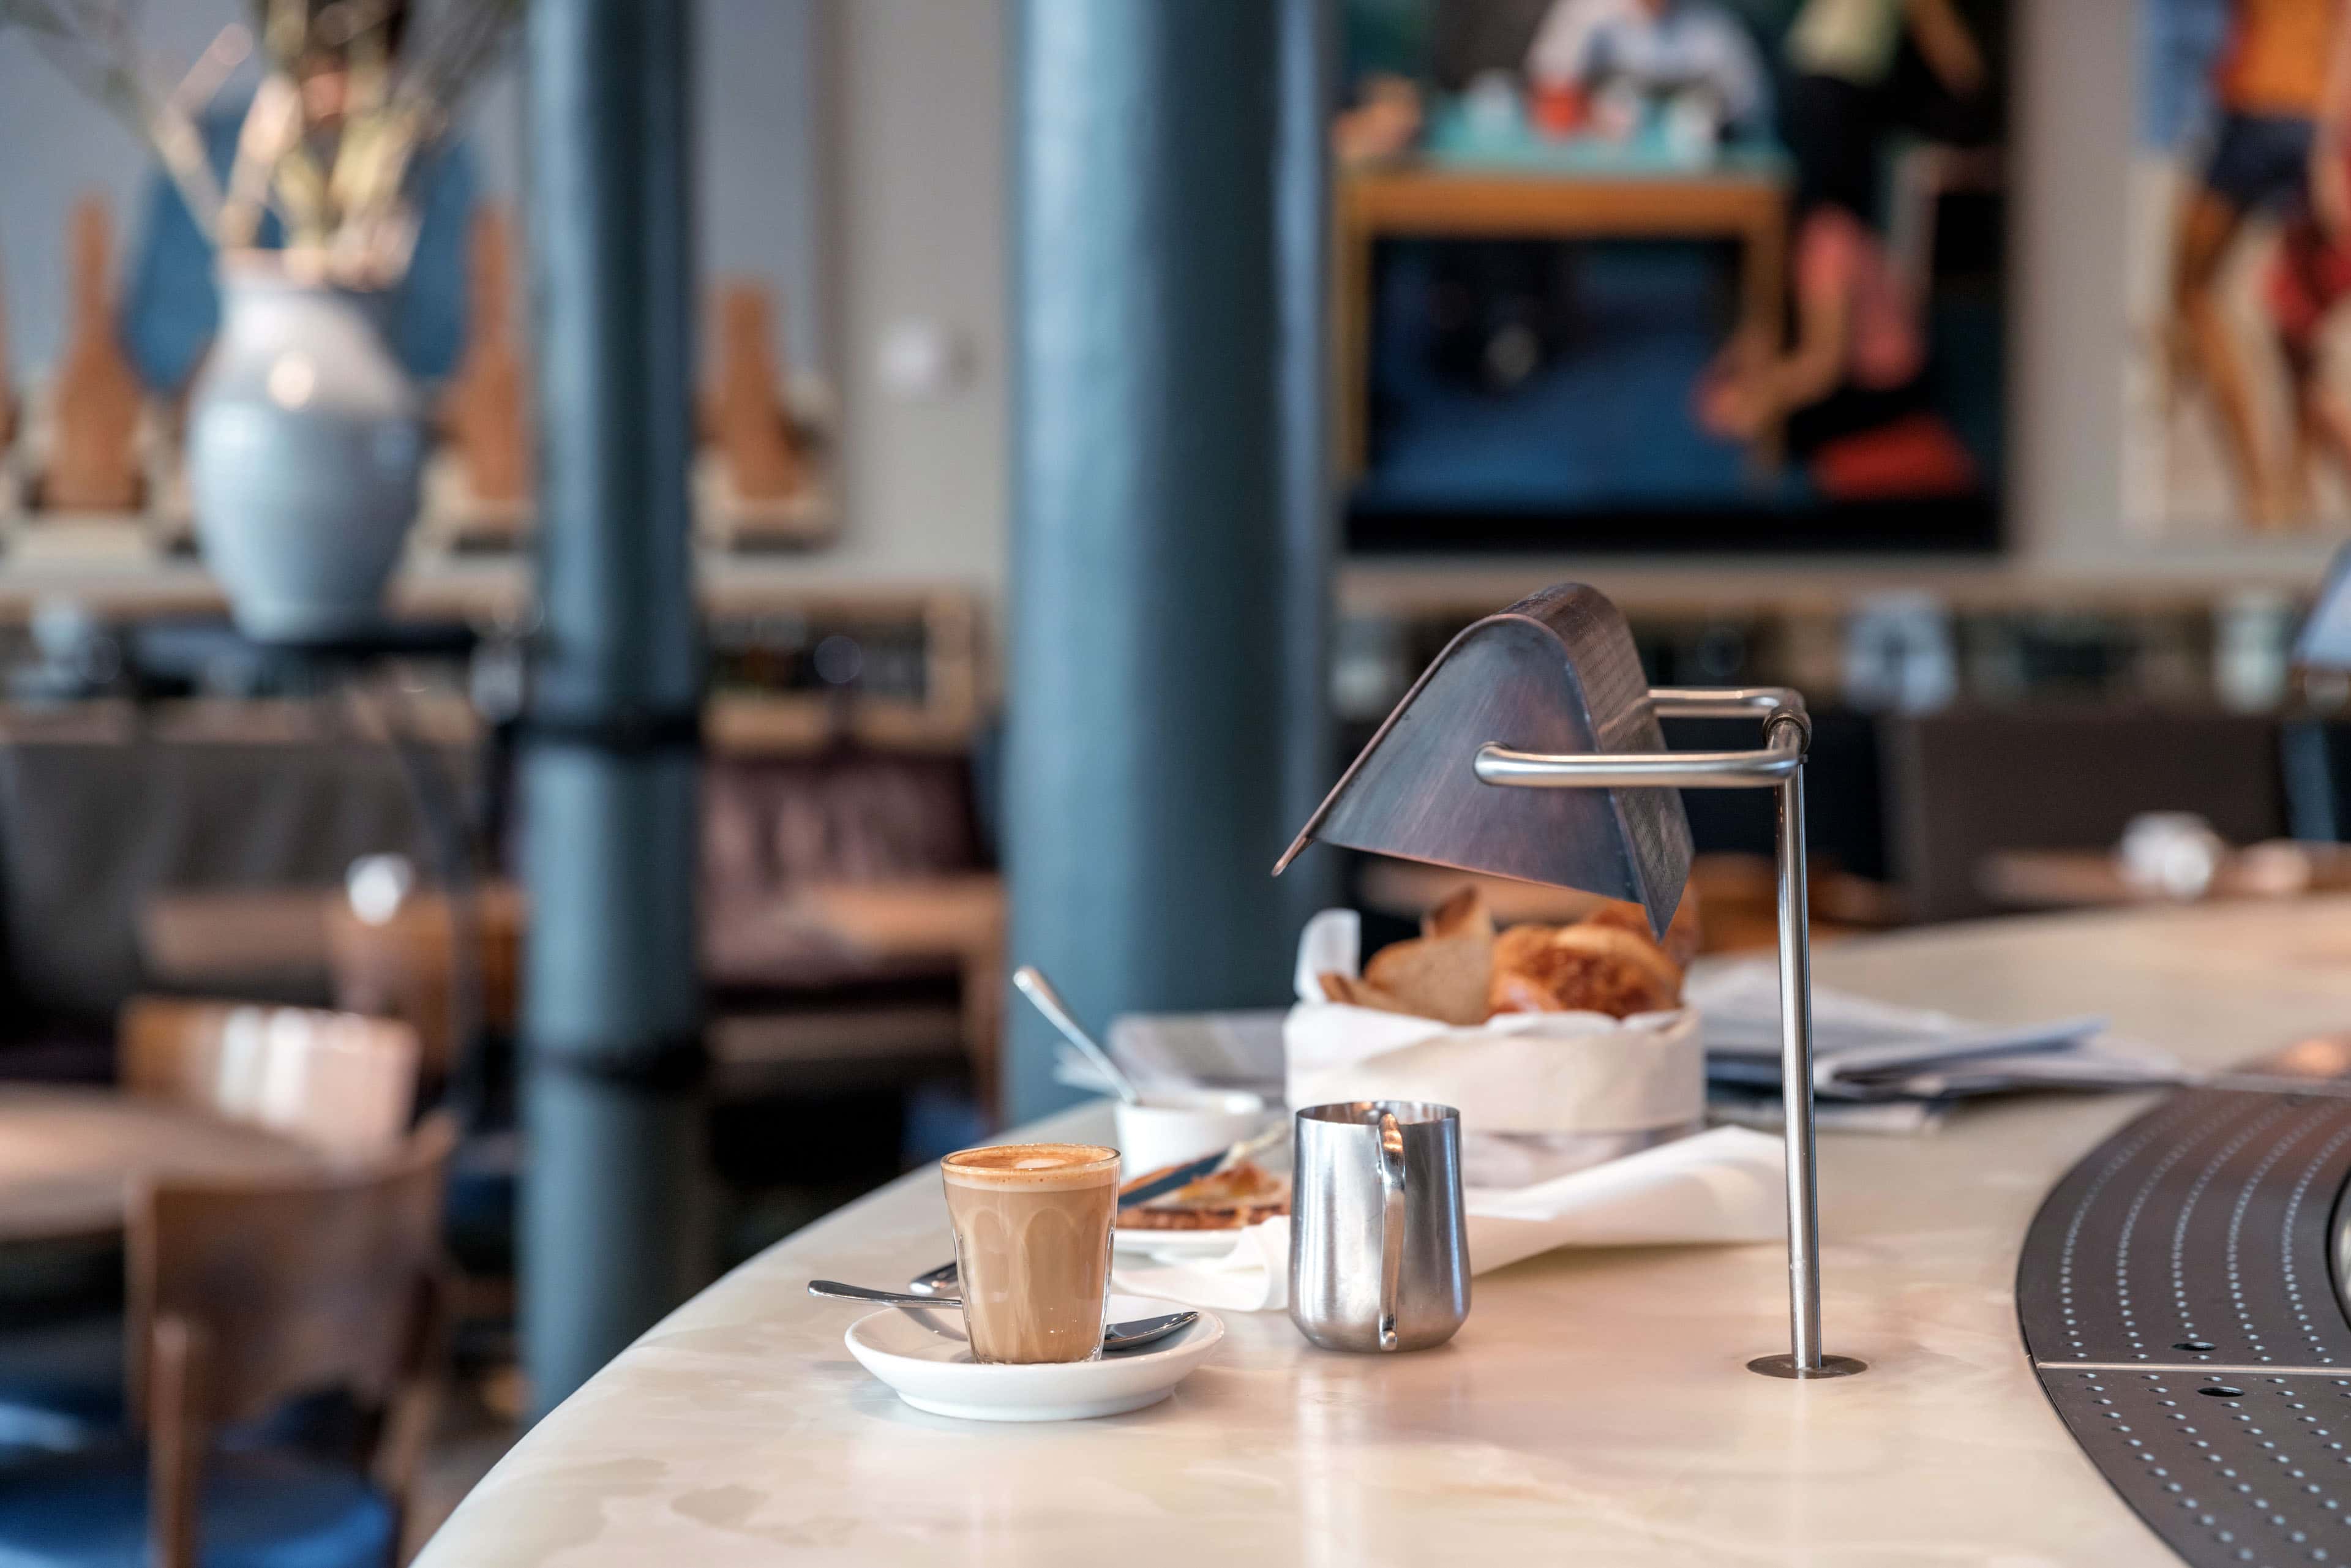 001 - 2016 - Quod Restaurant & Bar - Bar Breakfast Coffee Croissant Blue Painting - Web Hero